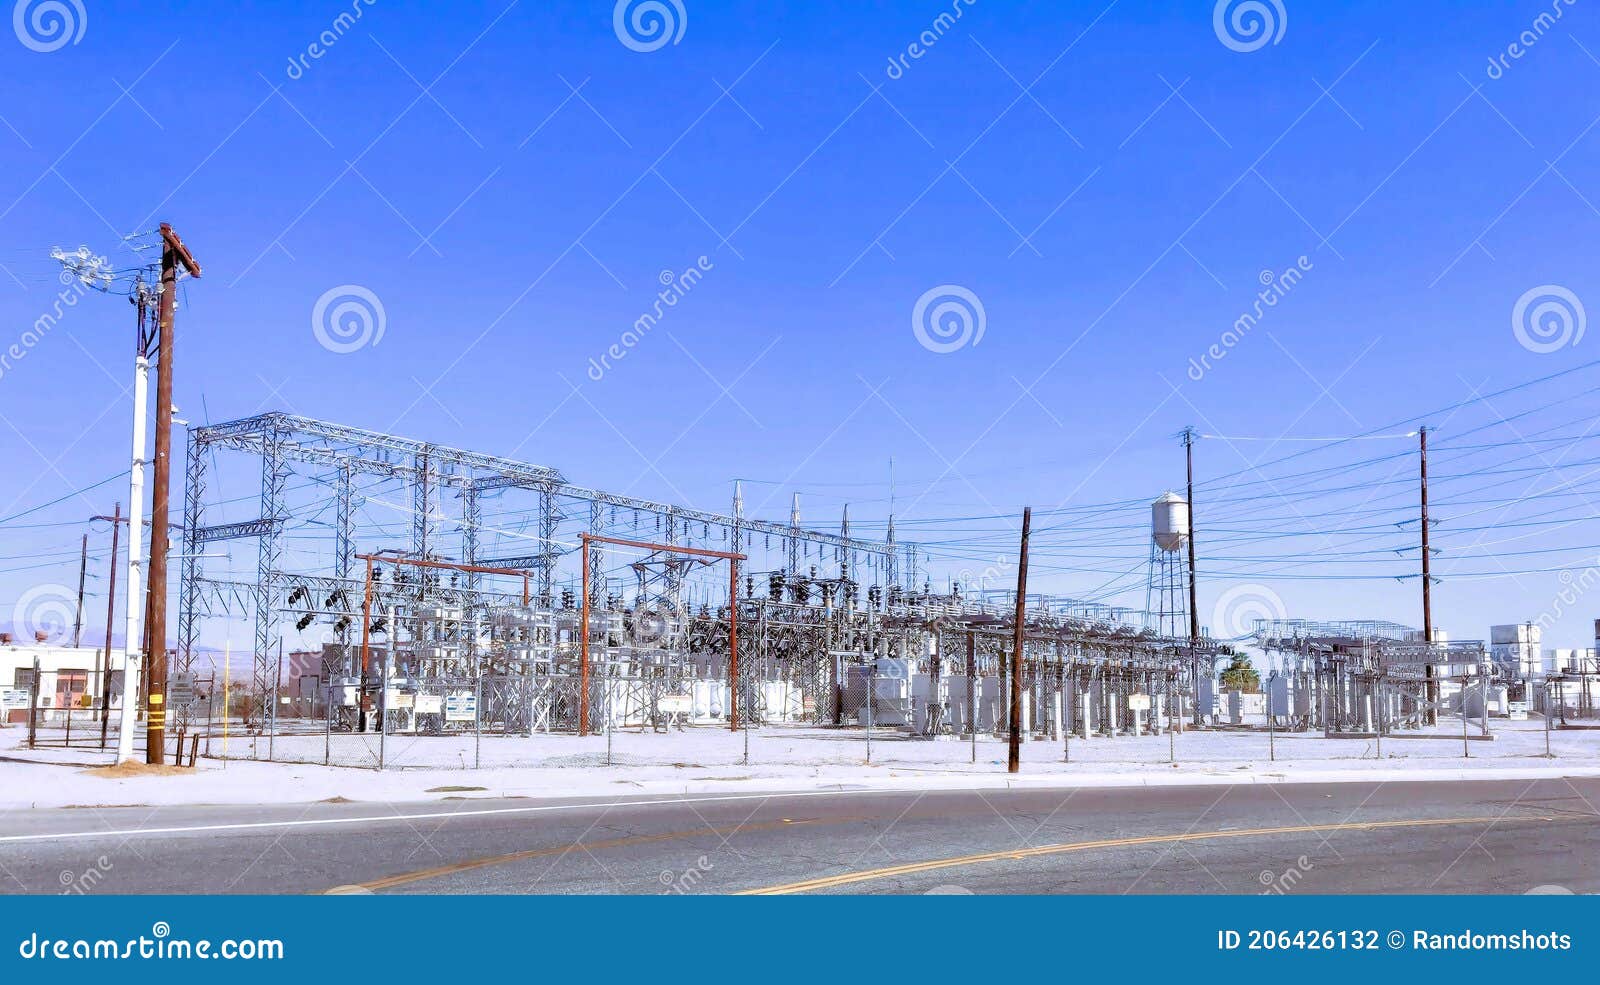 indio power grid transmission station